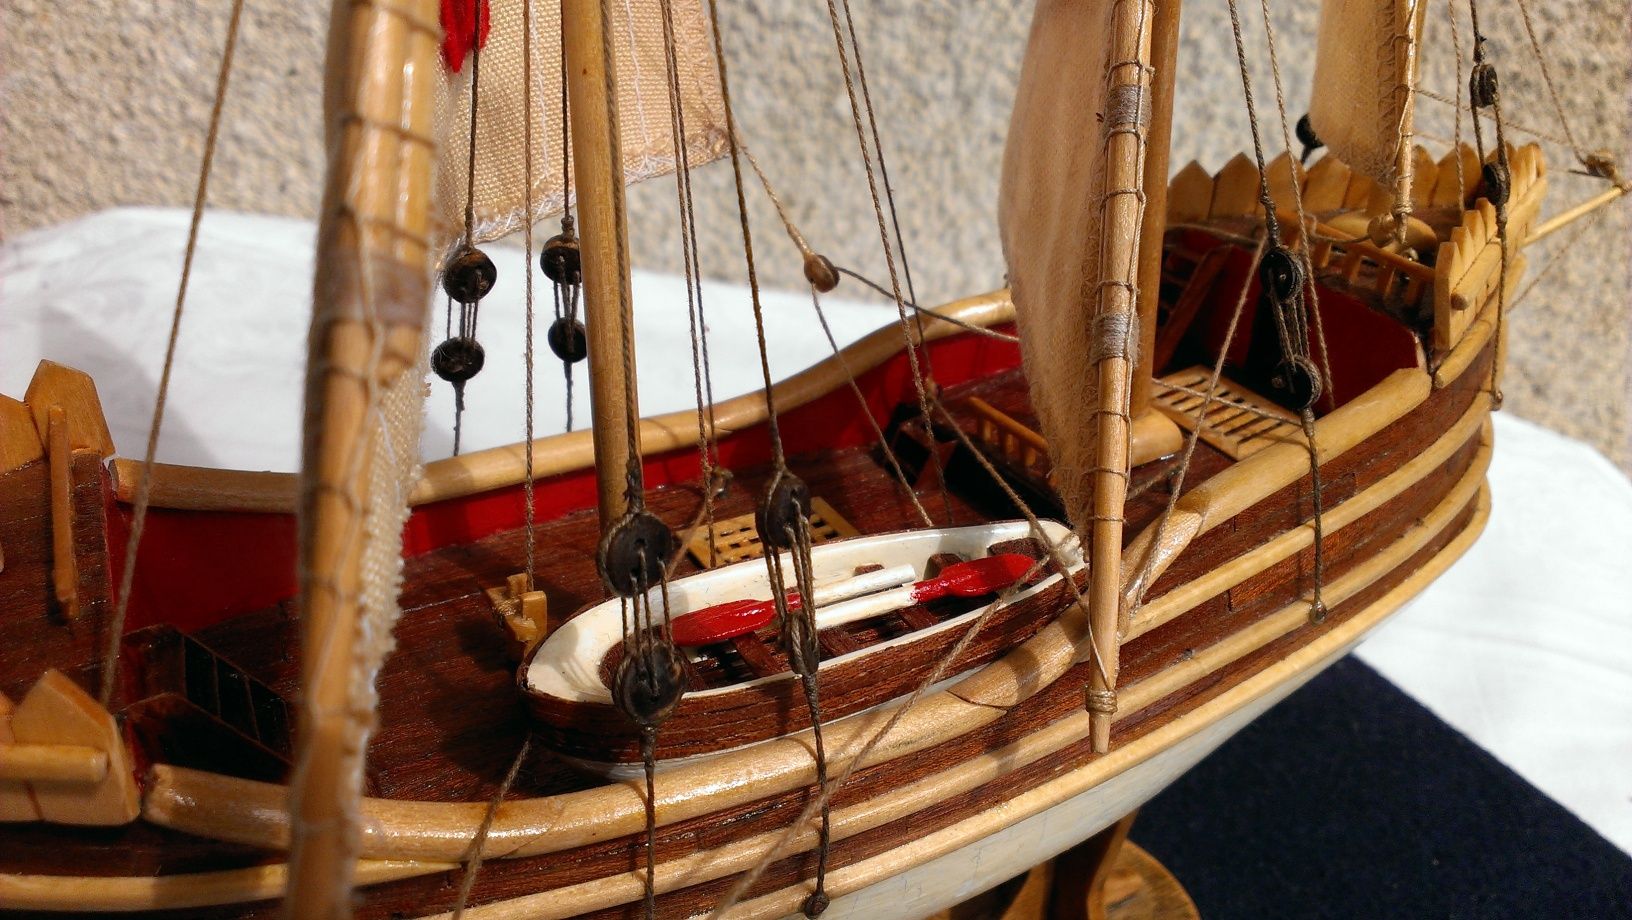 Macheta Pinta/Nina corabie din lemn dupa un plan/ confectionata manual